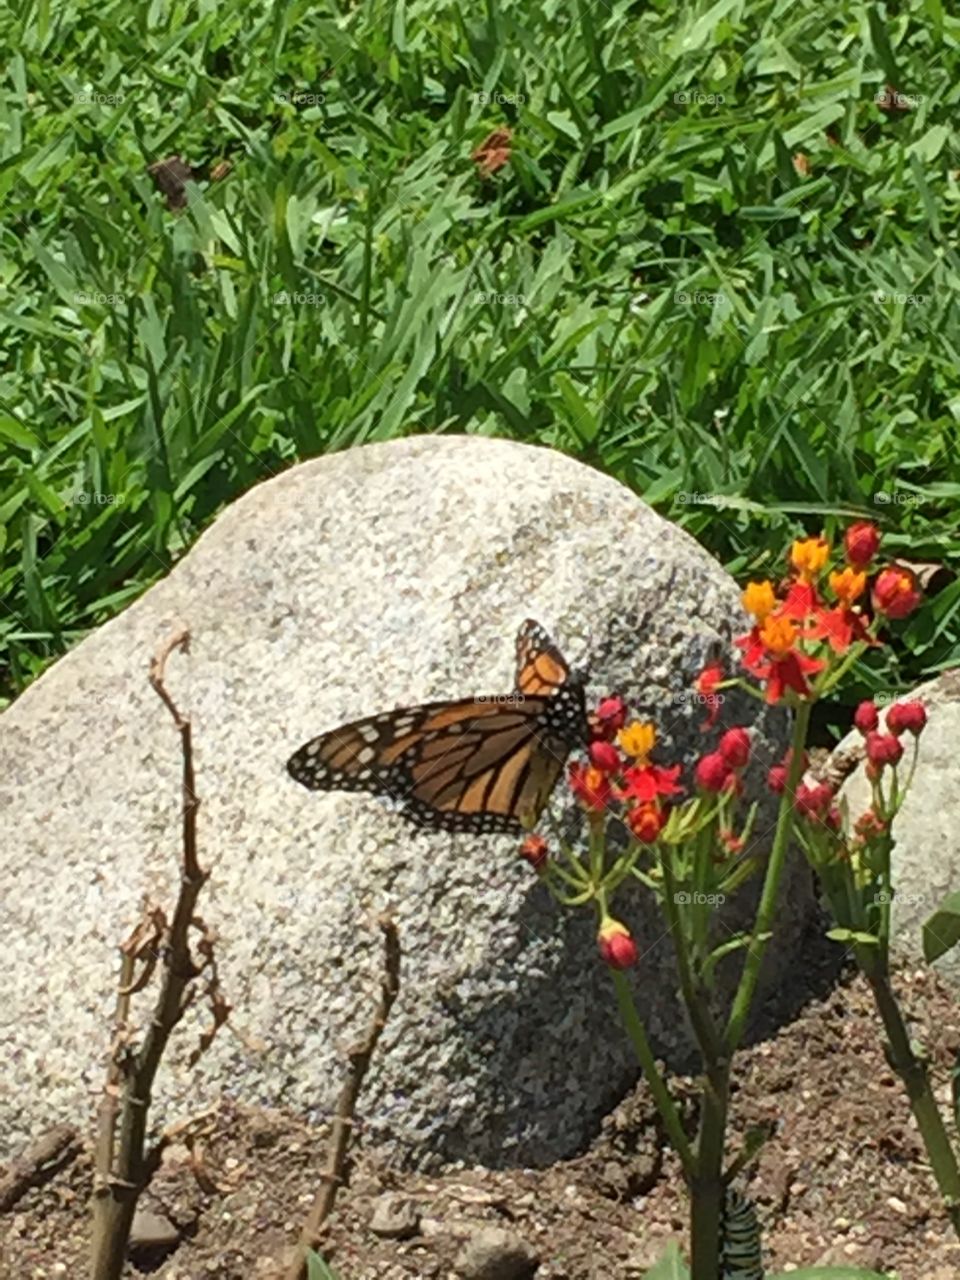 Butterfly and caterpillar on Milkweed 